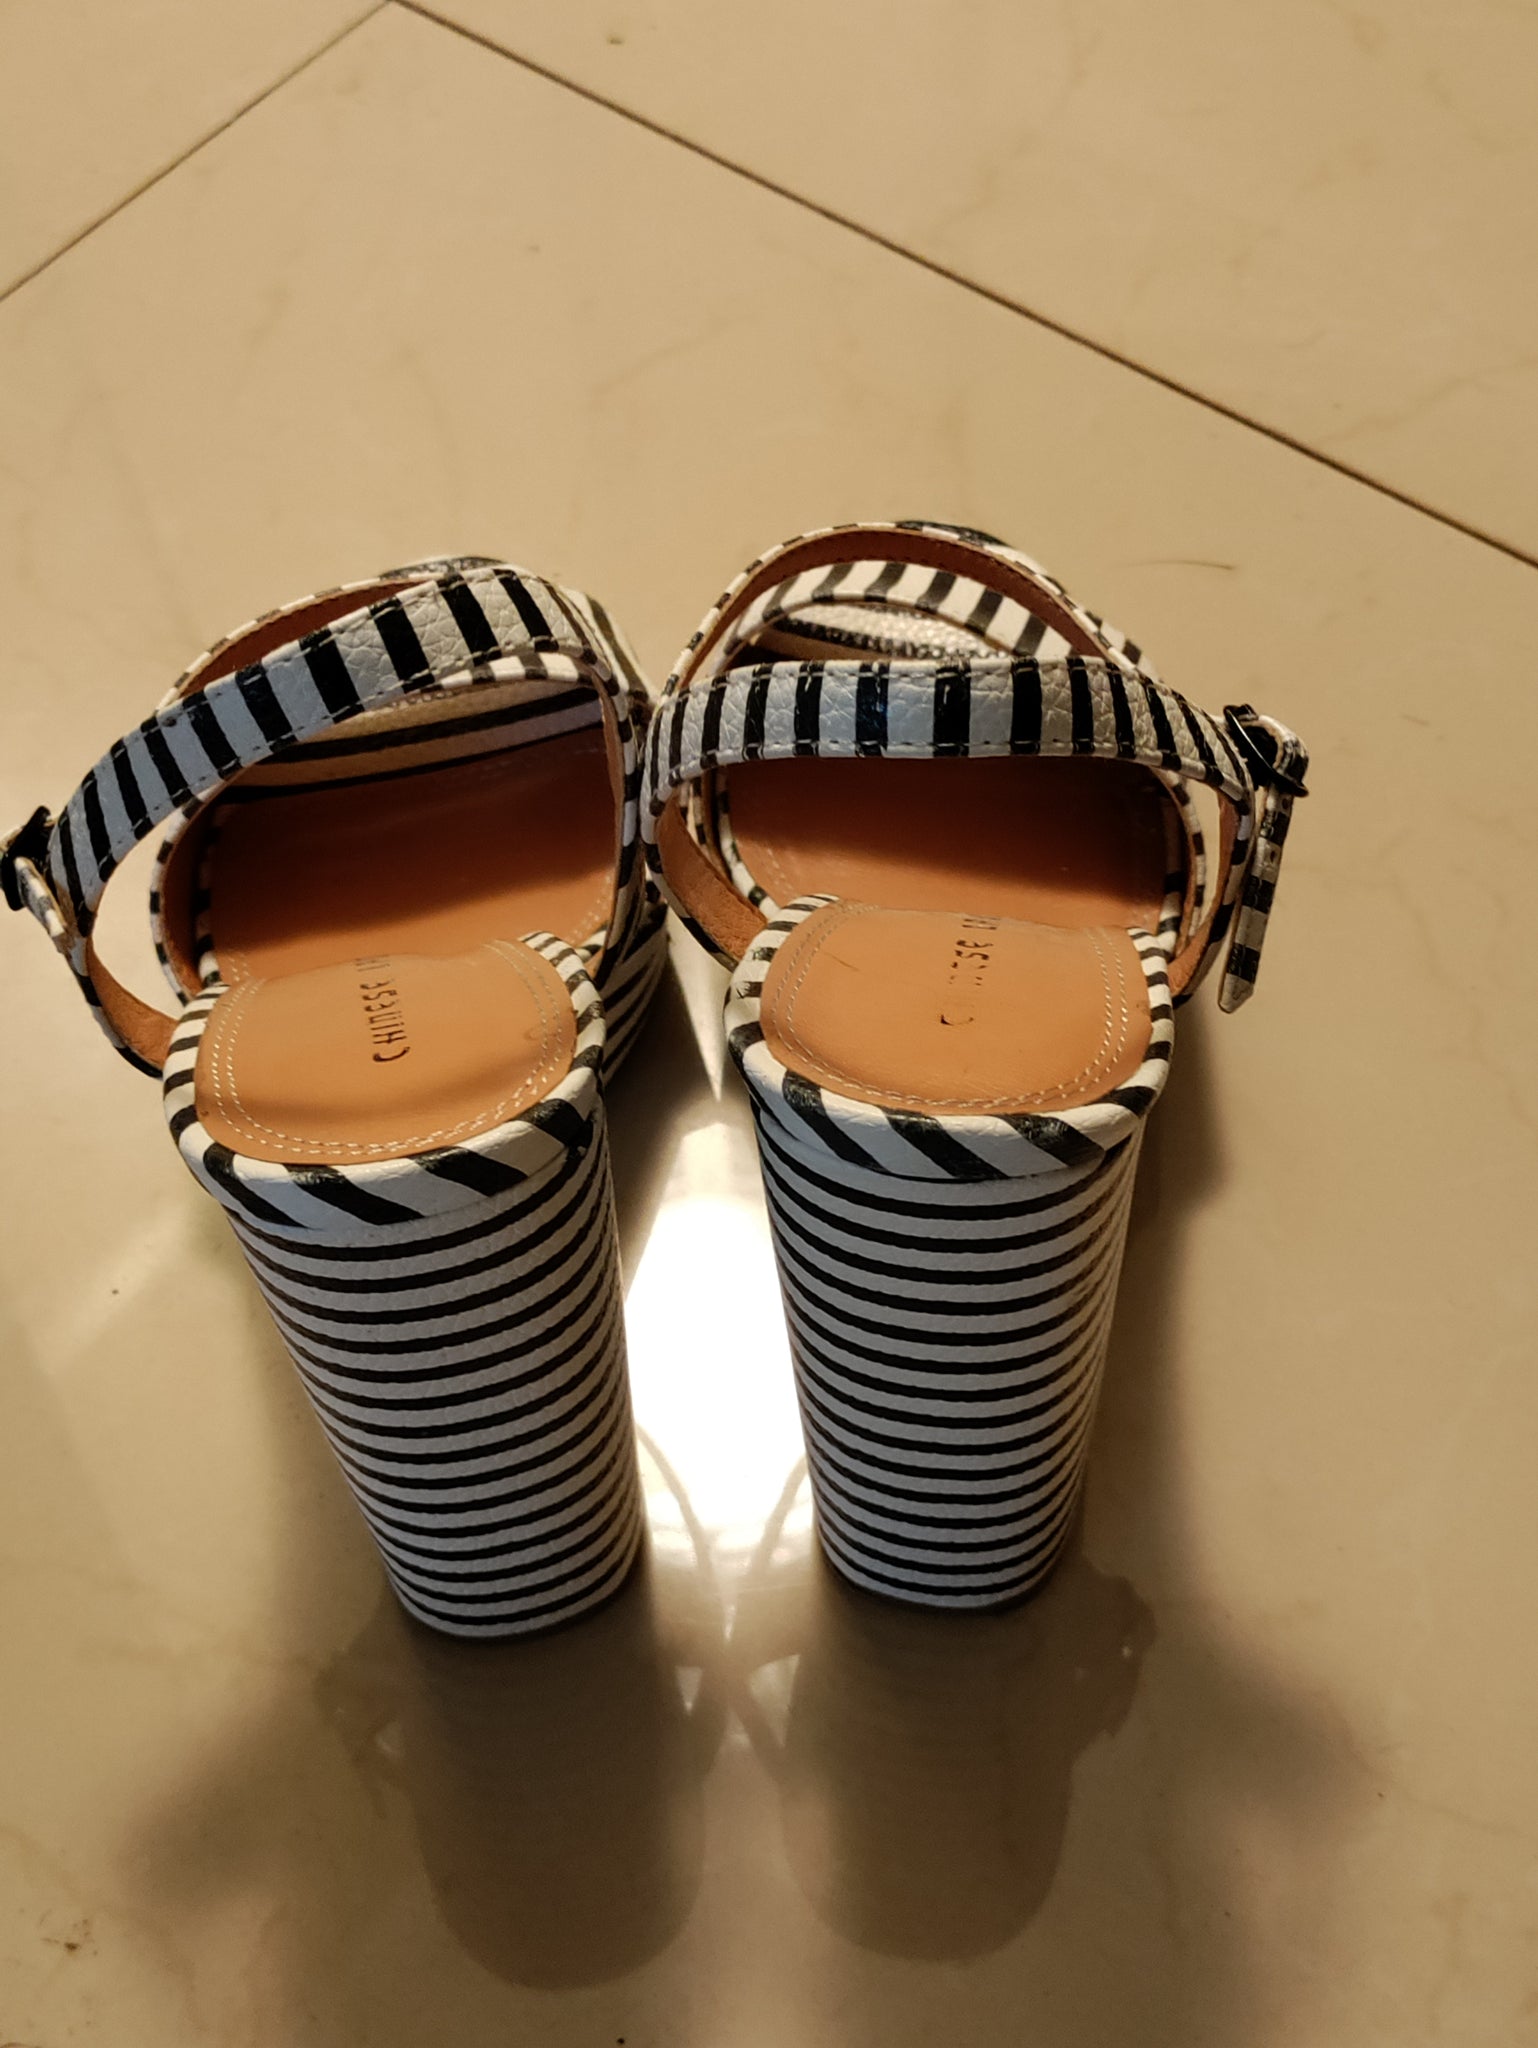 Chinese Laundry heels